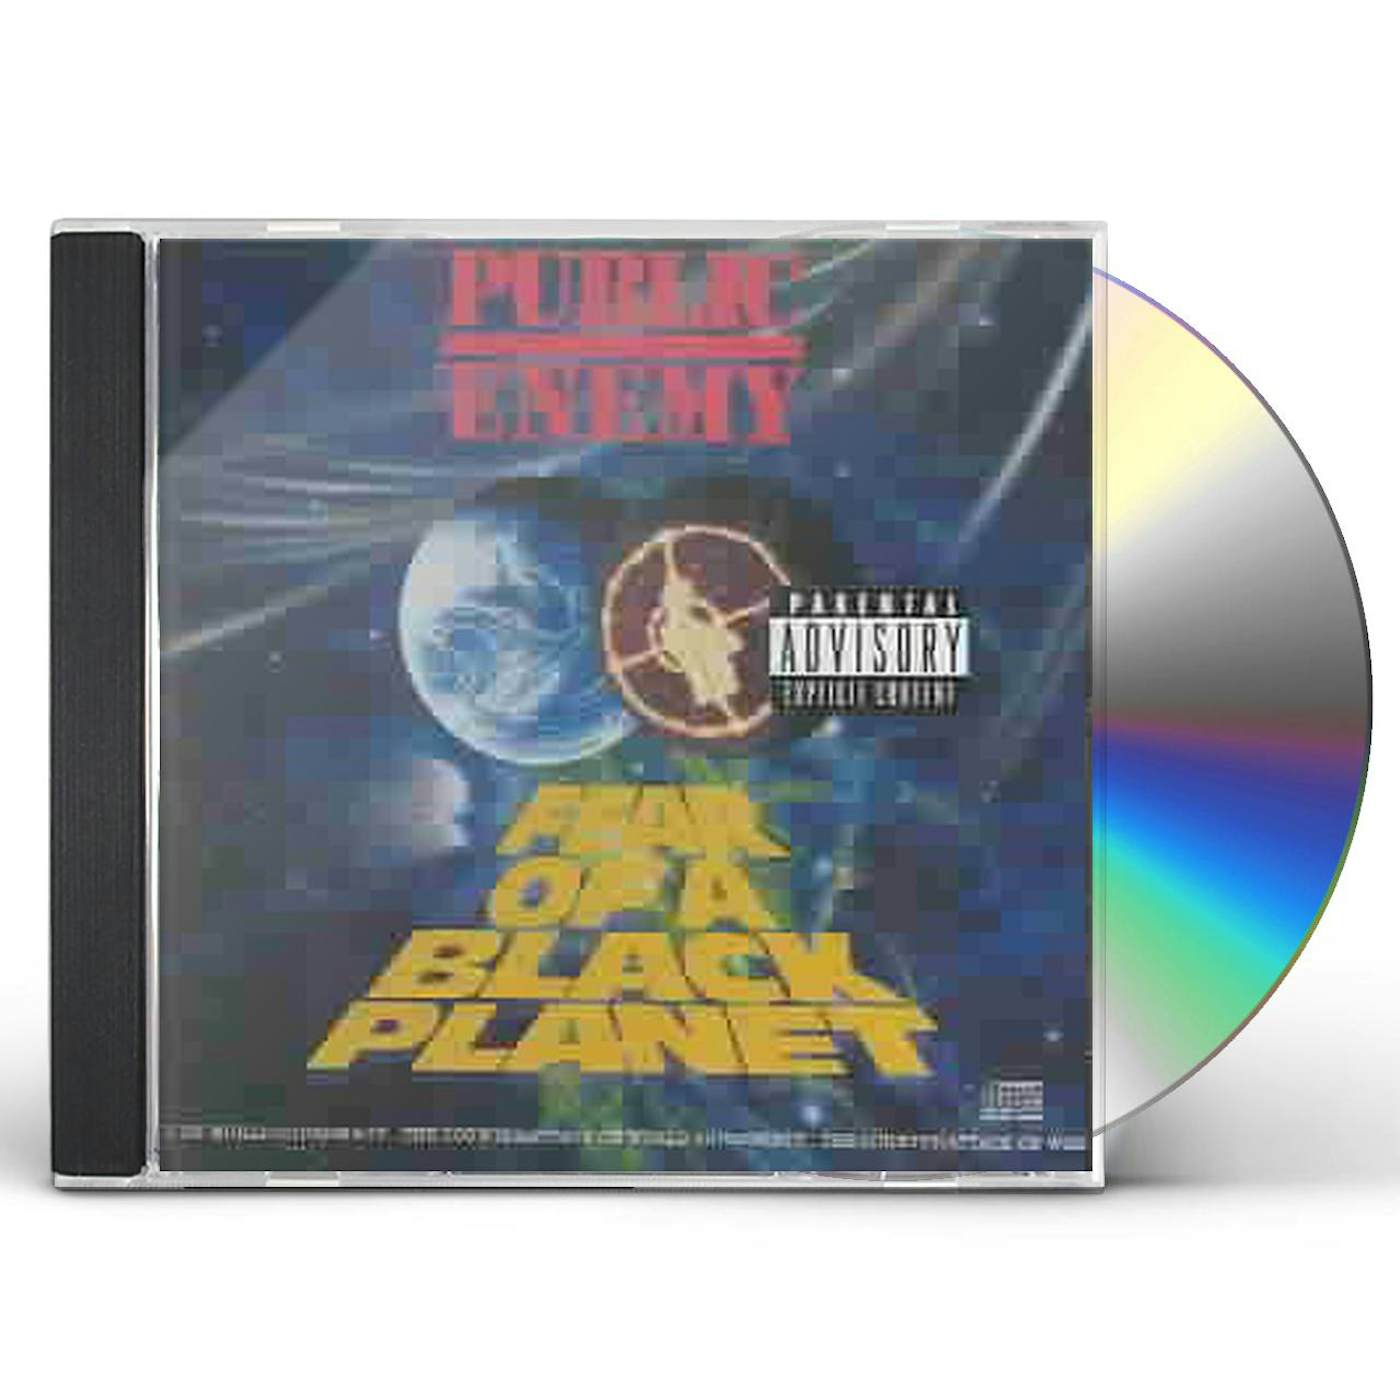 Public Enemy FEAR OF A BLACK PLANET CD